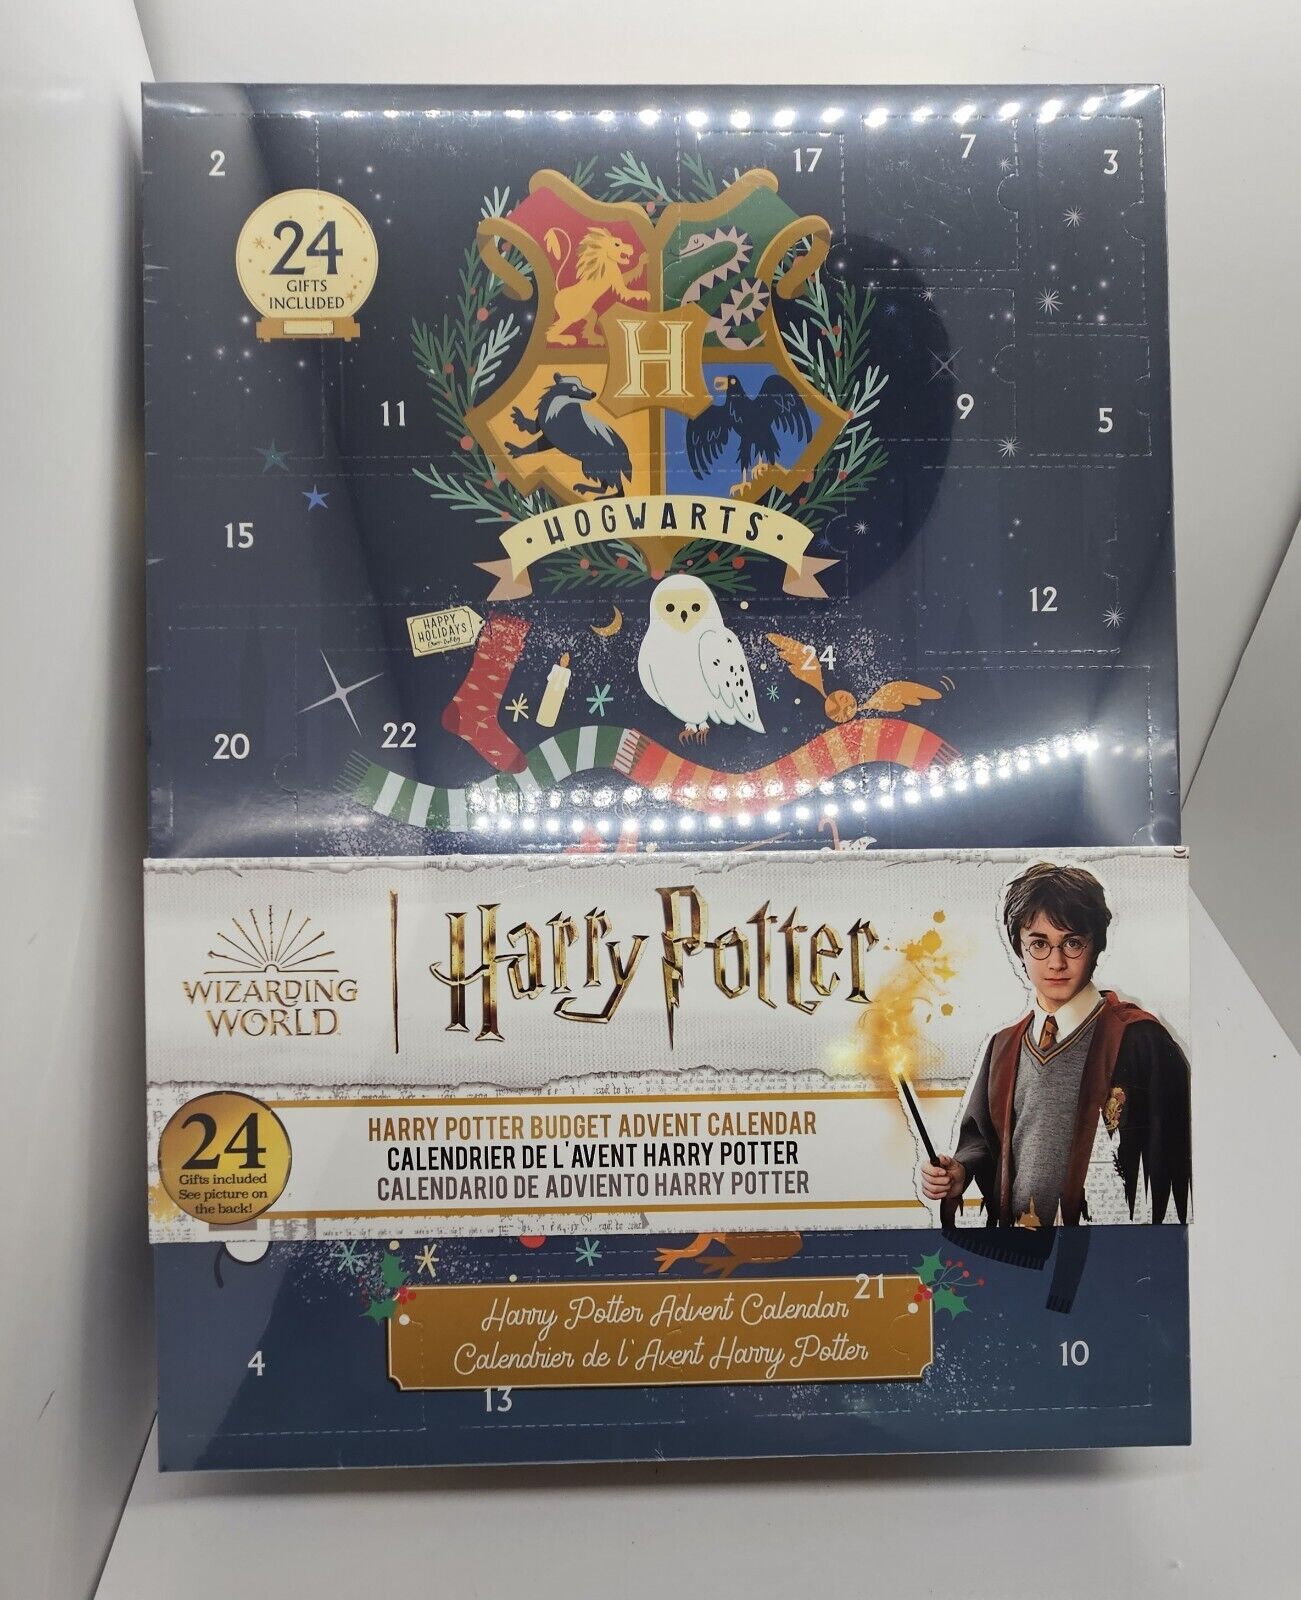 Harry Potter -cinereplicas Advent Calendar - Official License